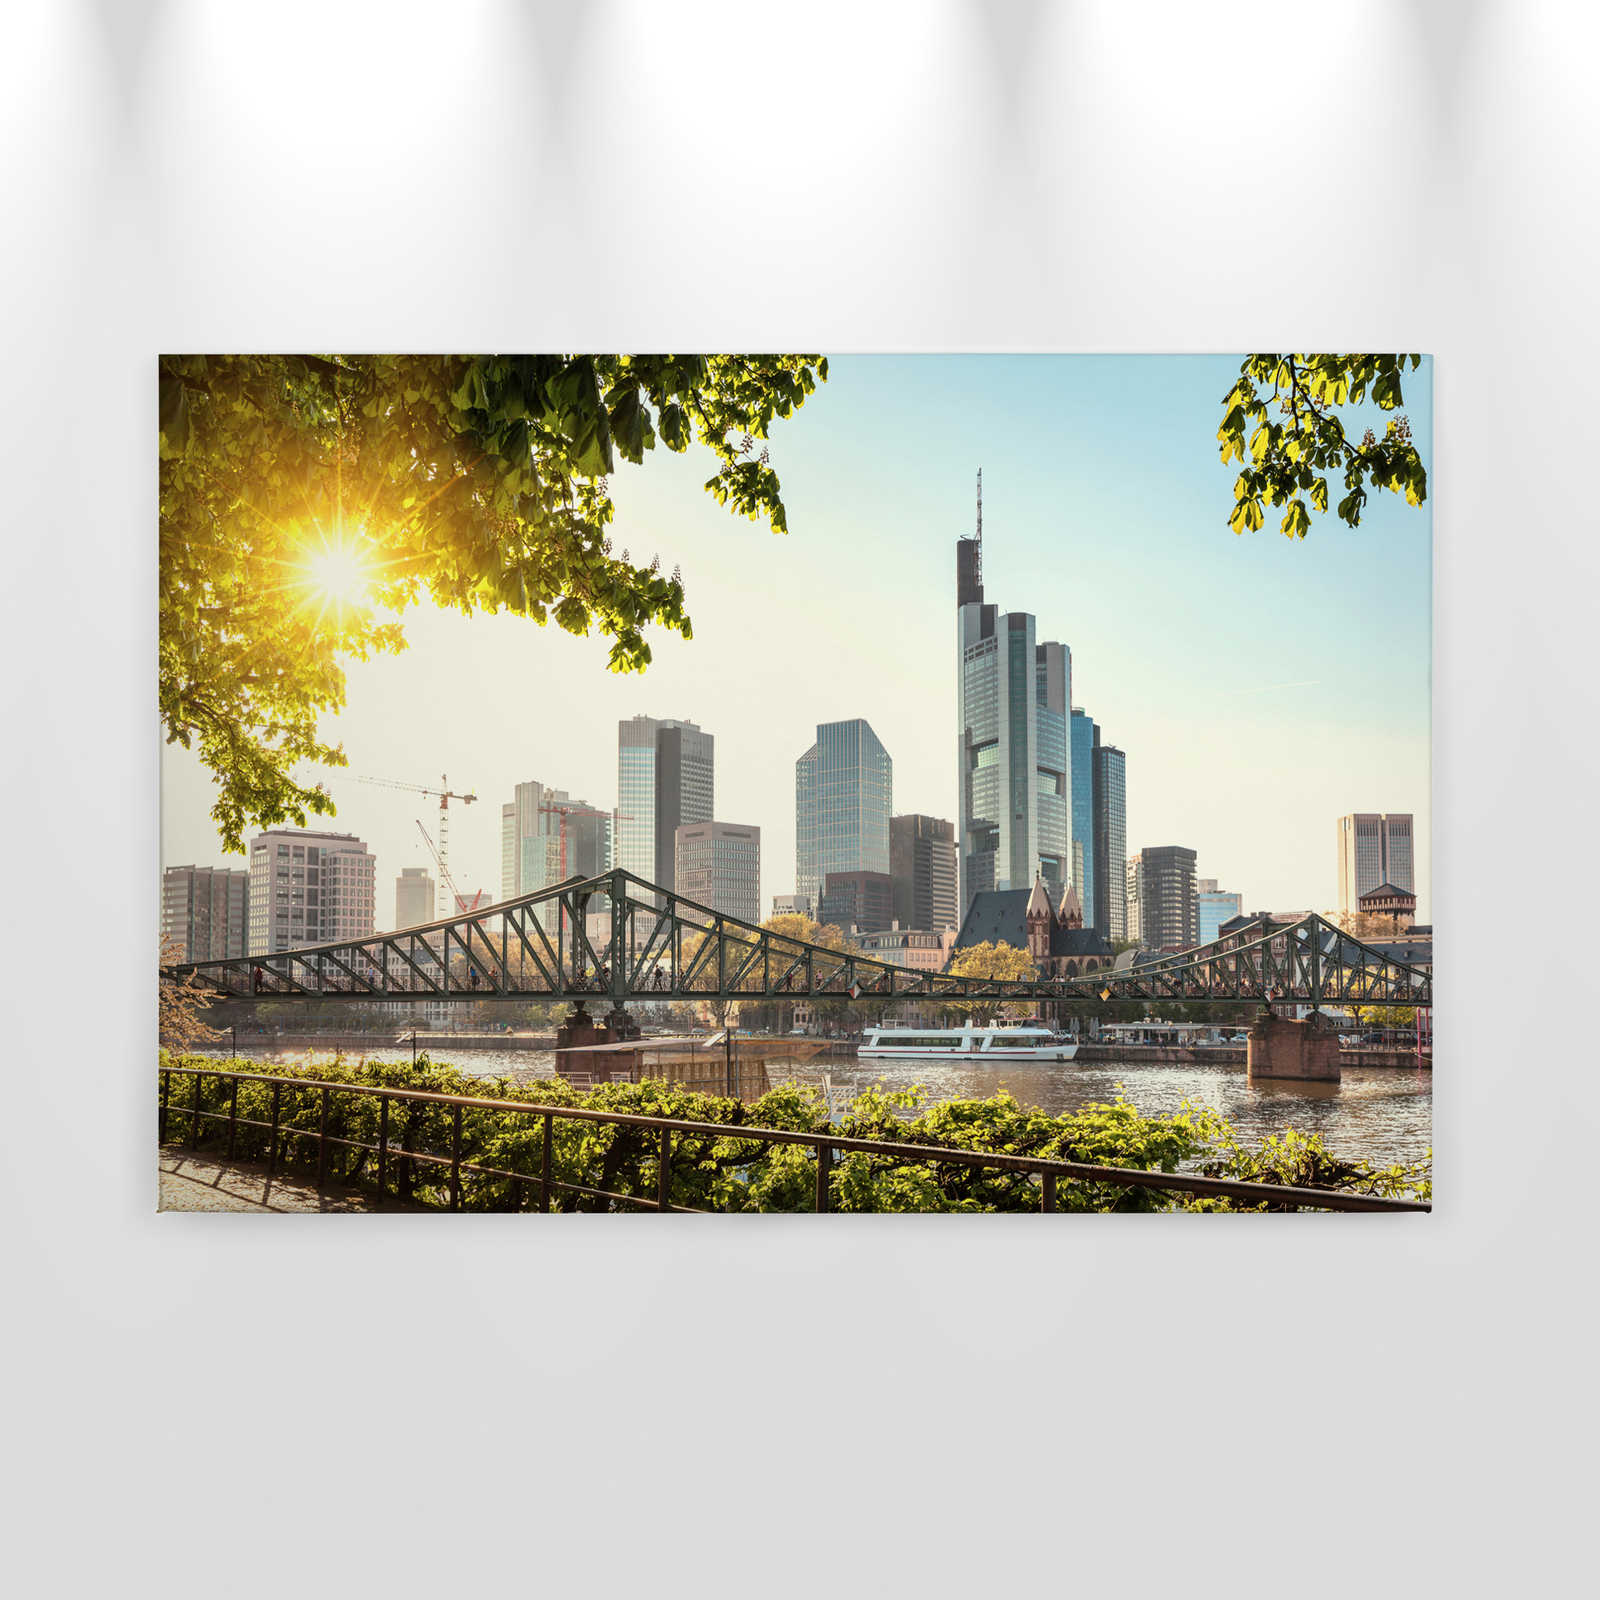             Toile avec Frankfurt Skyline - 0,90 m x 0,60 m
        